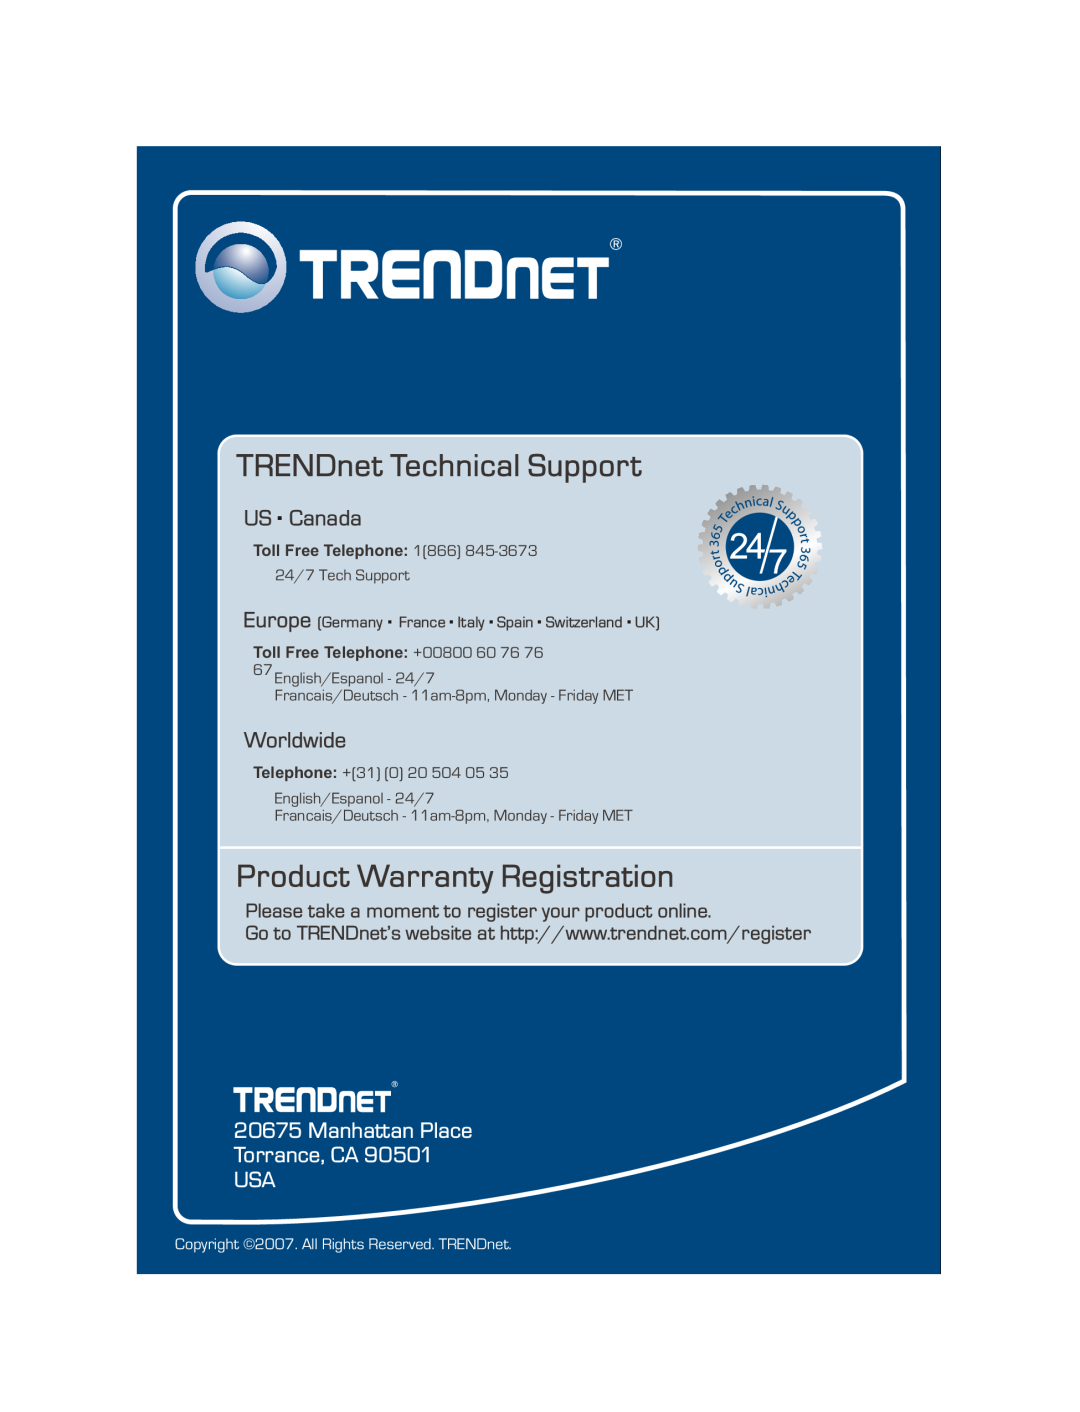 TRENDnet TEG-S224 Manhattan Place Torrance, CA USA, TRENDnet Technical Support, Product Warranty Registration, US . Canada 